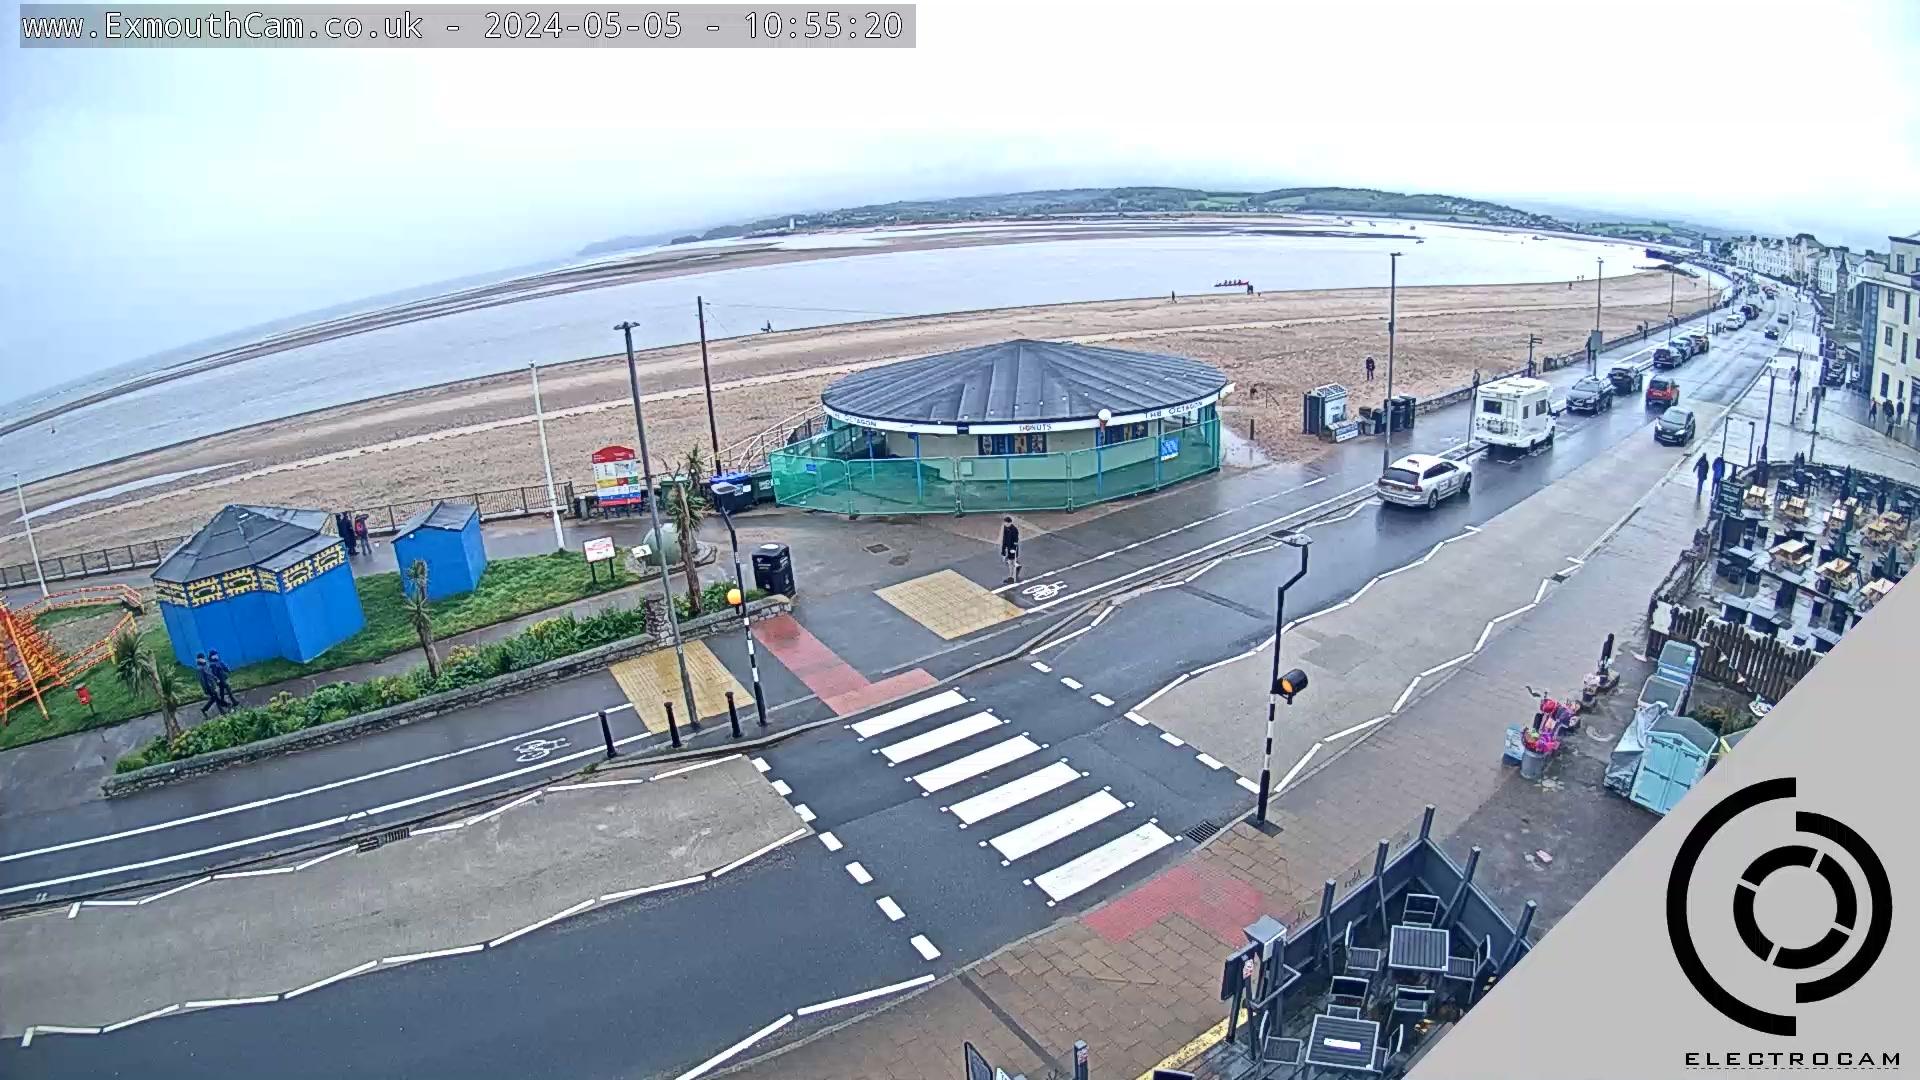 Seafront Webcam